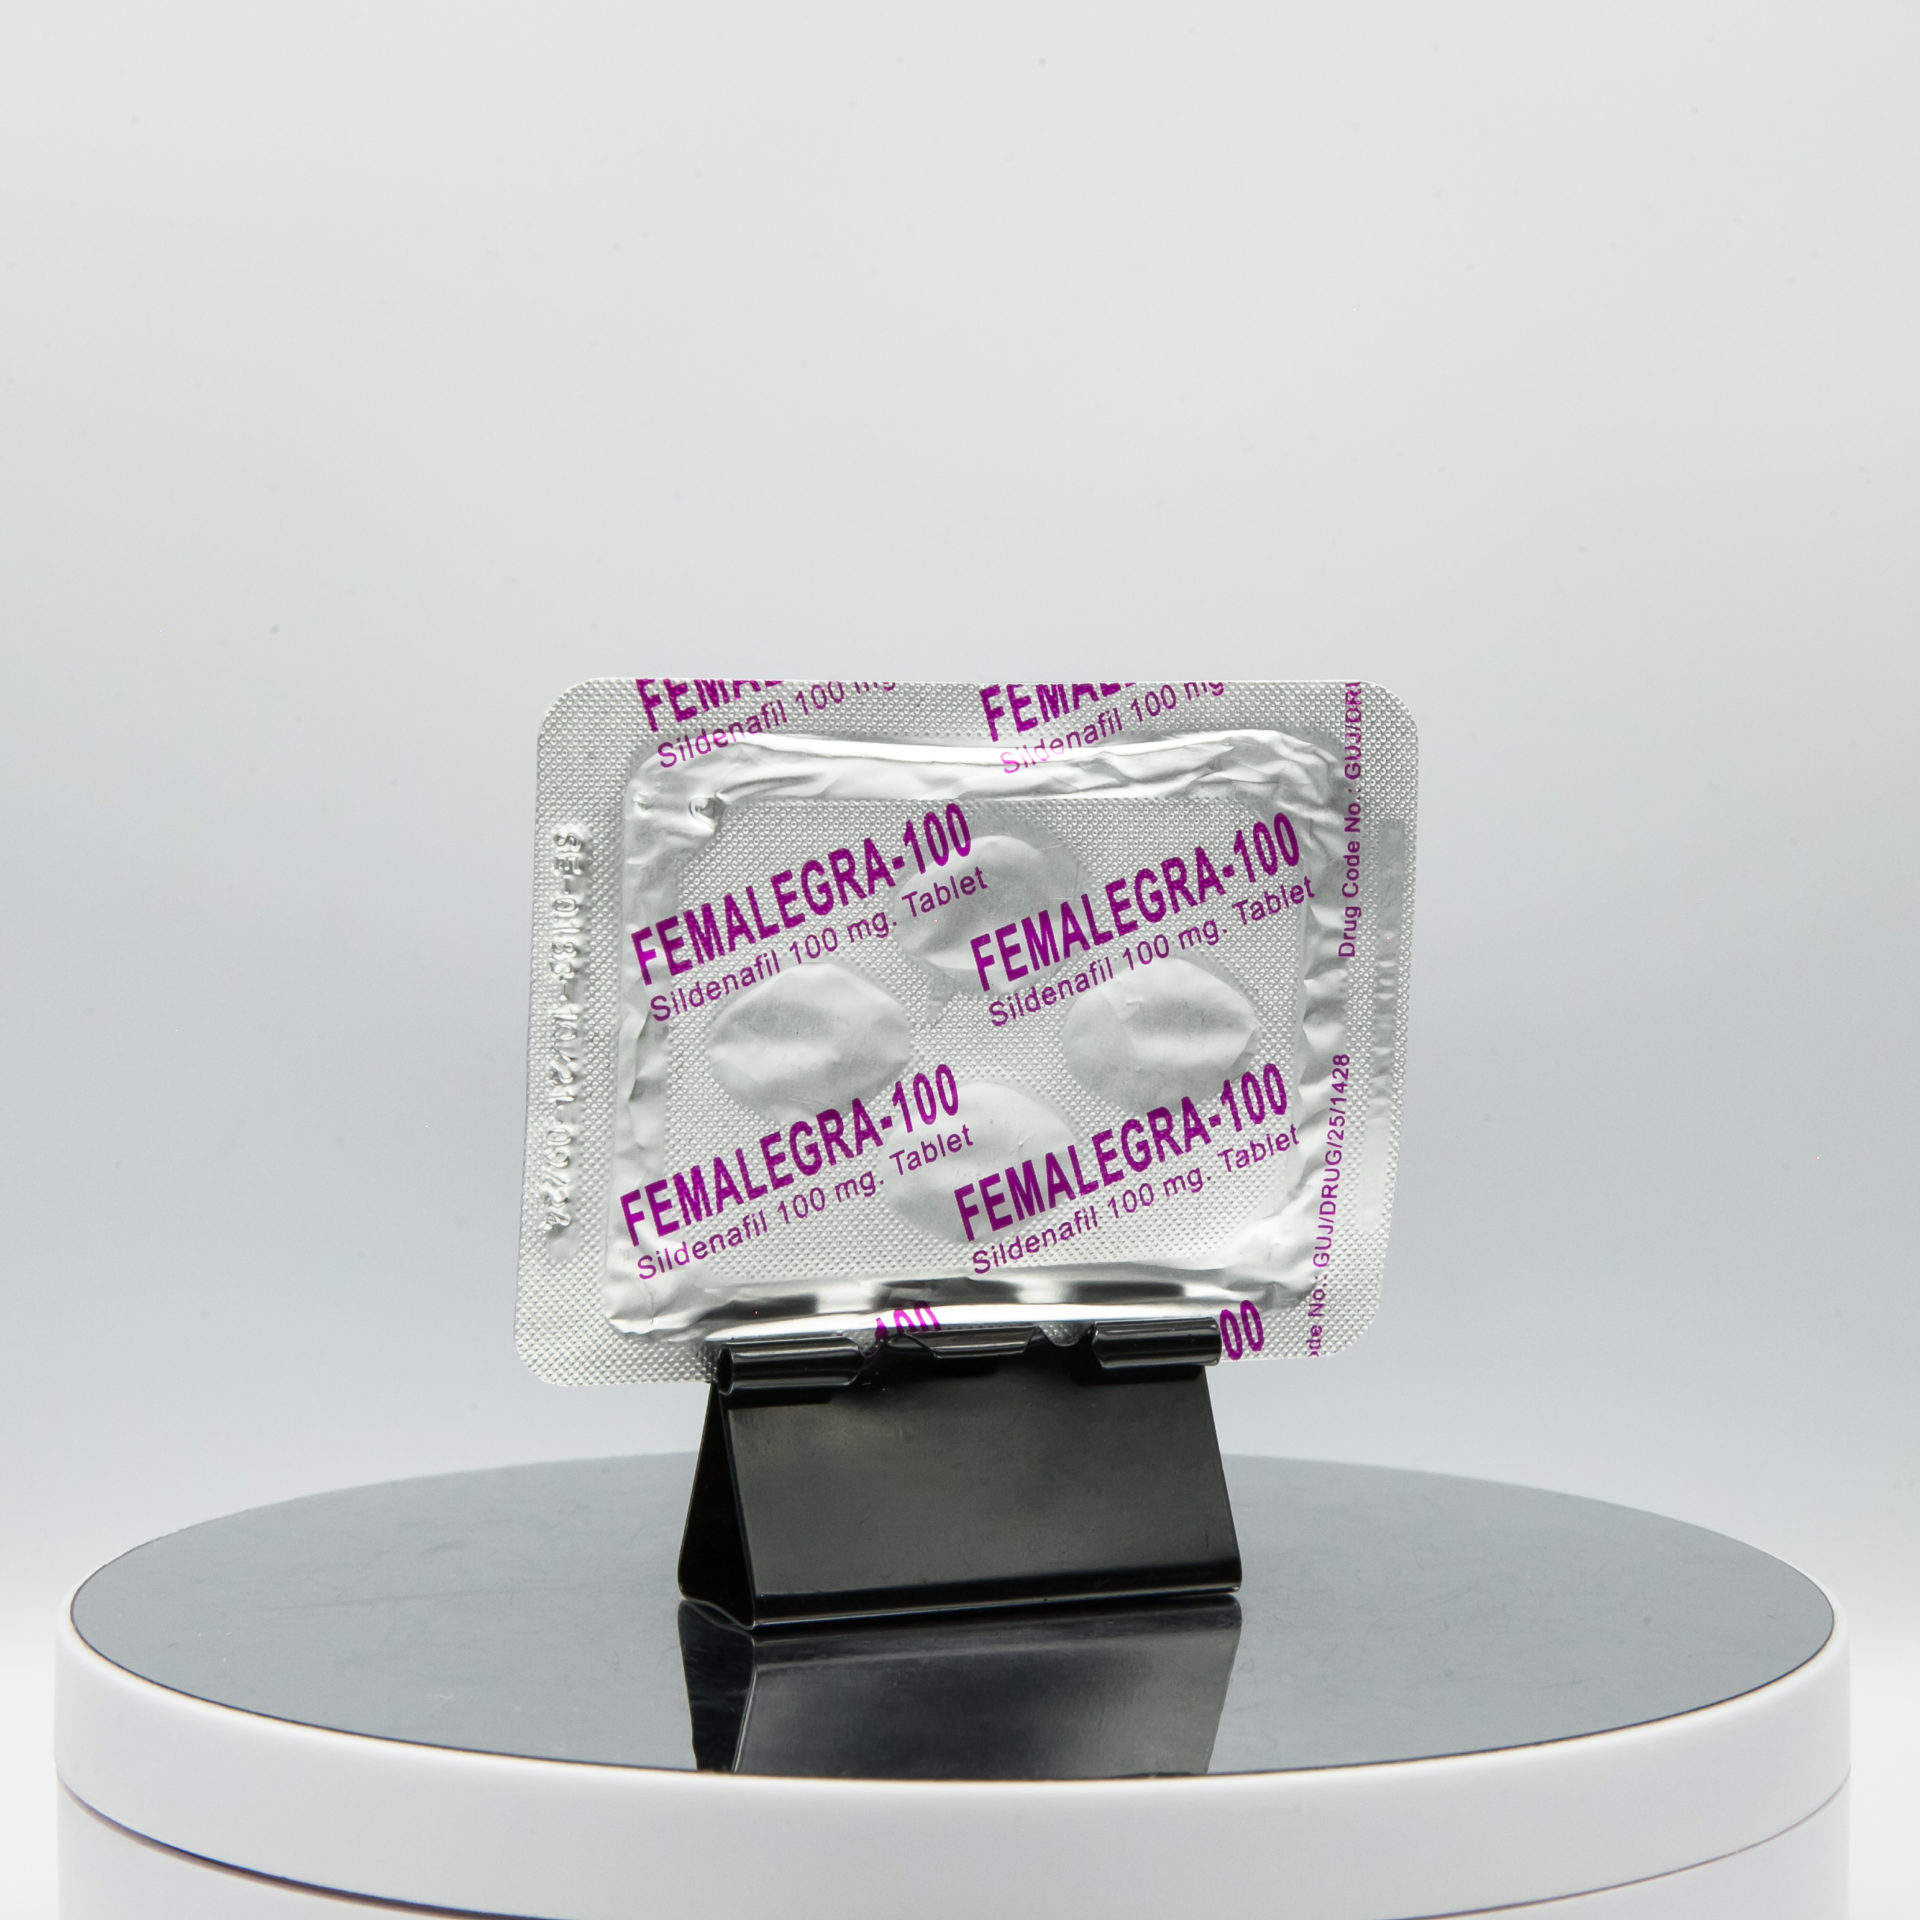 Femalegra-100 100 mg Sunrise Sildenafil Citrate (Viagra generic)